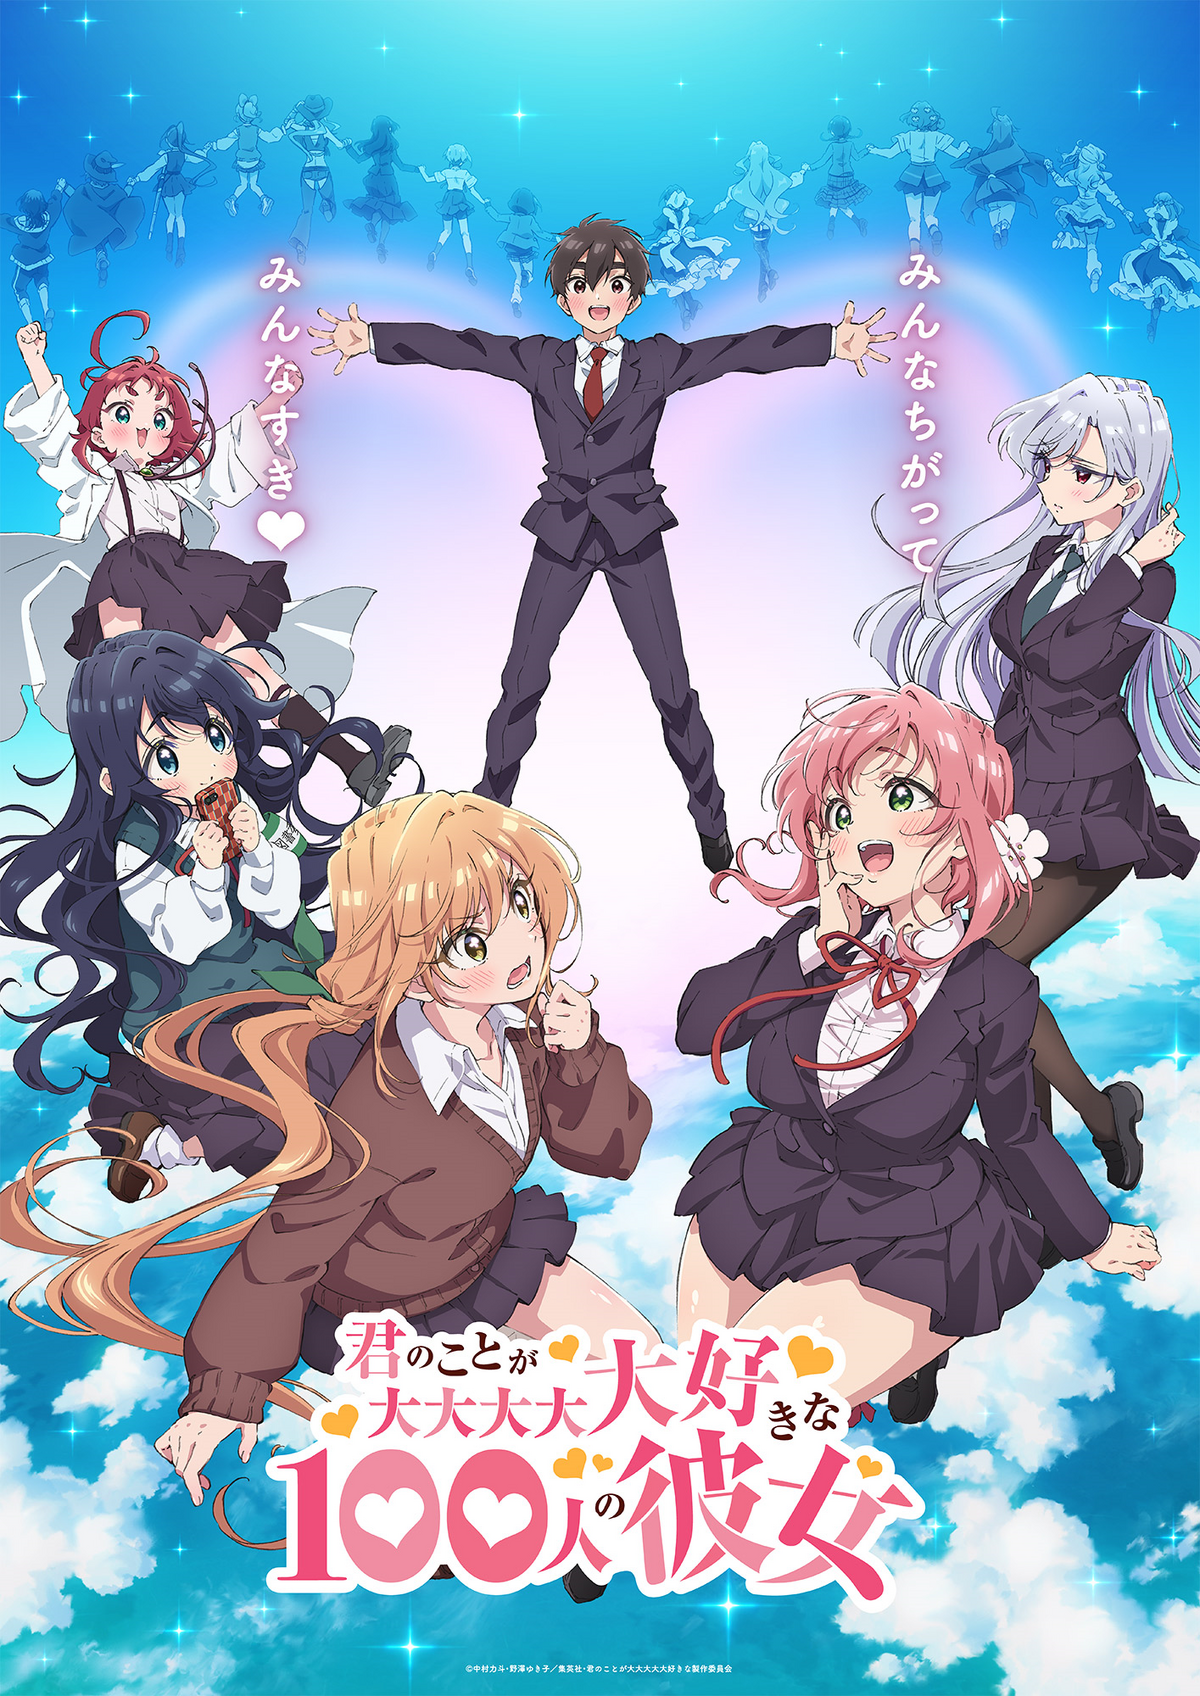 Date A Live Season 4 Anime's New Promo Features The Kurumi Arc